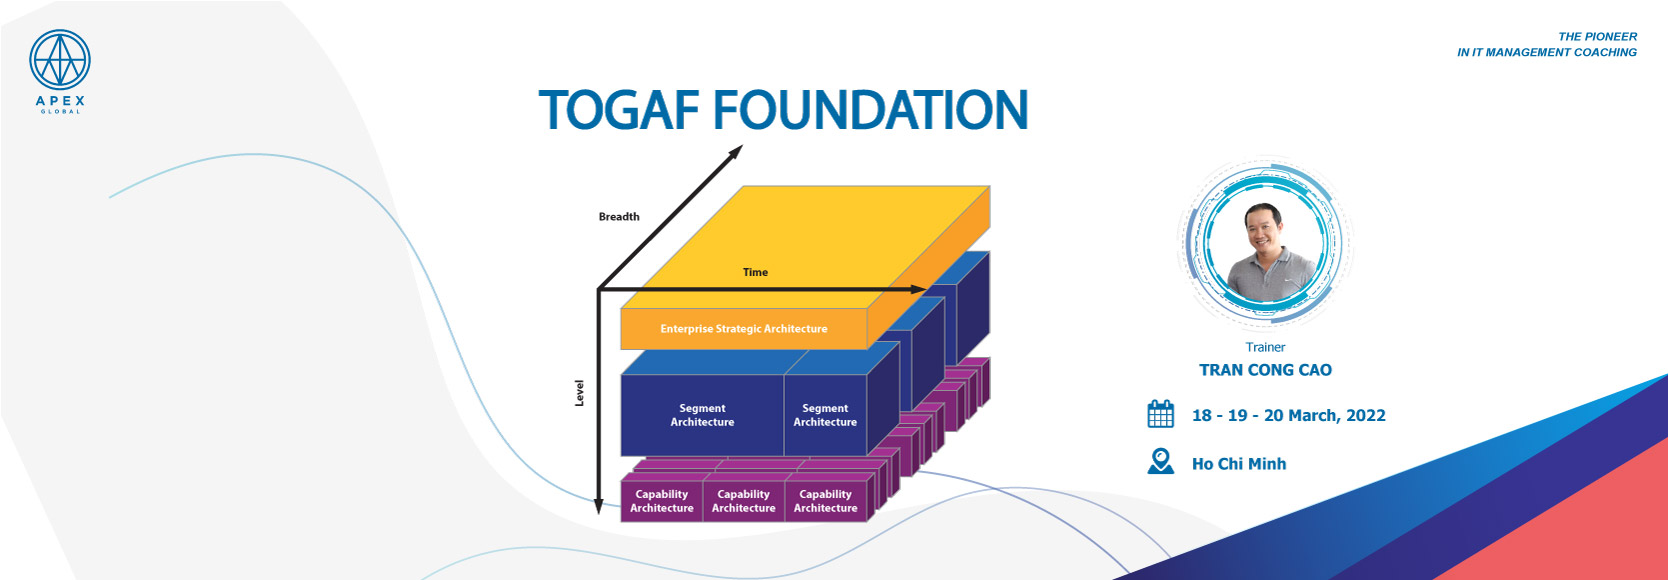 Togaf-foundation-apex-global